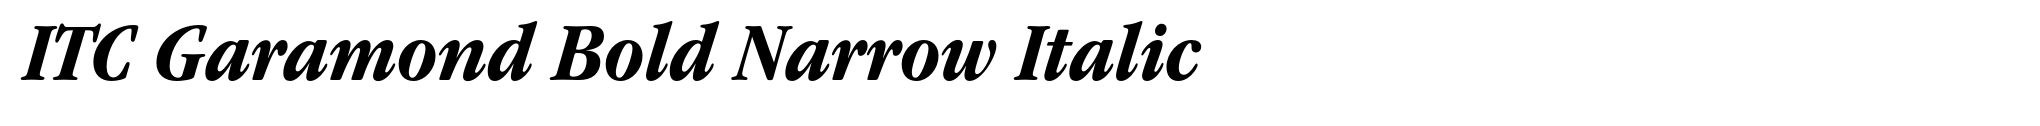 ITC Garamond Bold Narrow Italic image